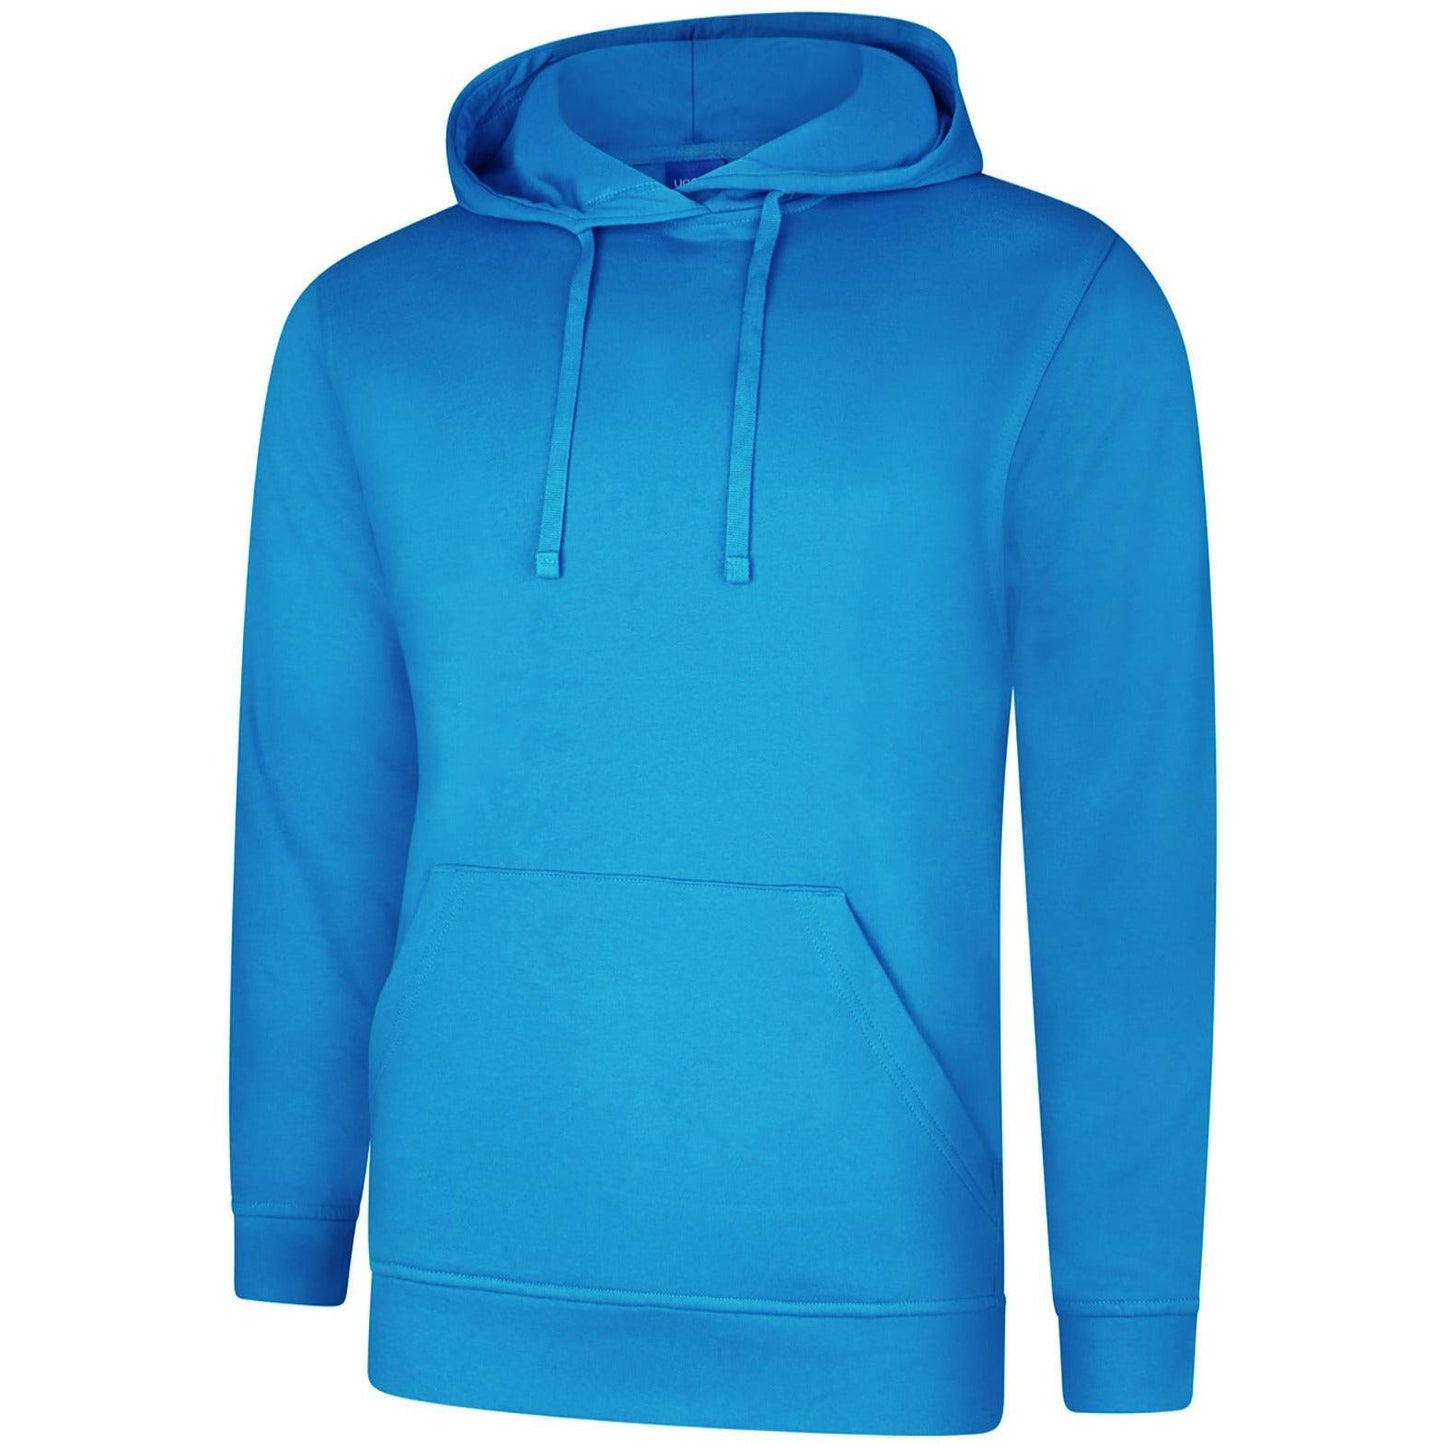 Deluxe Hooded Sweatshirt (XS - M) Reef Blue